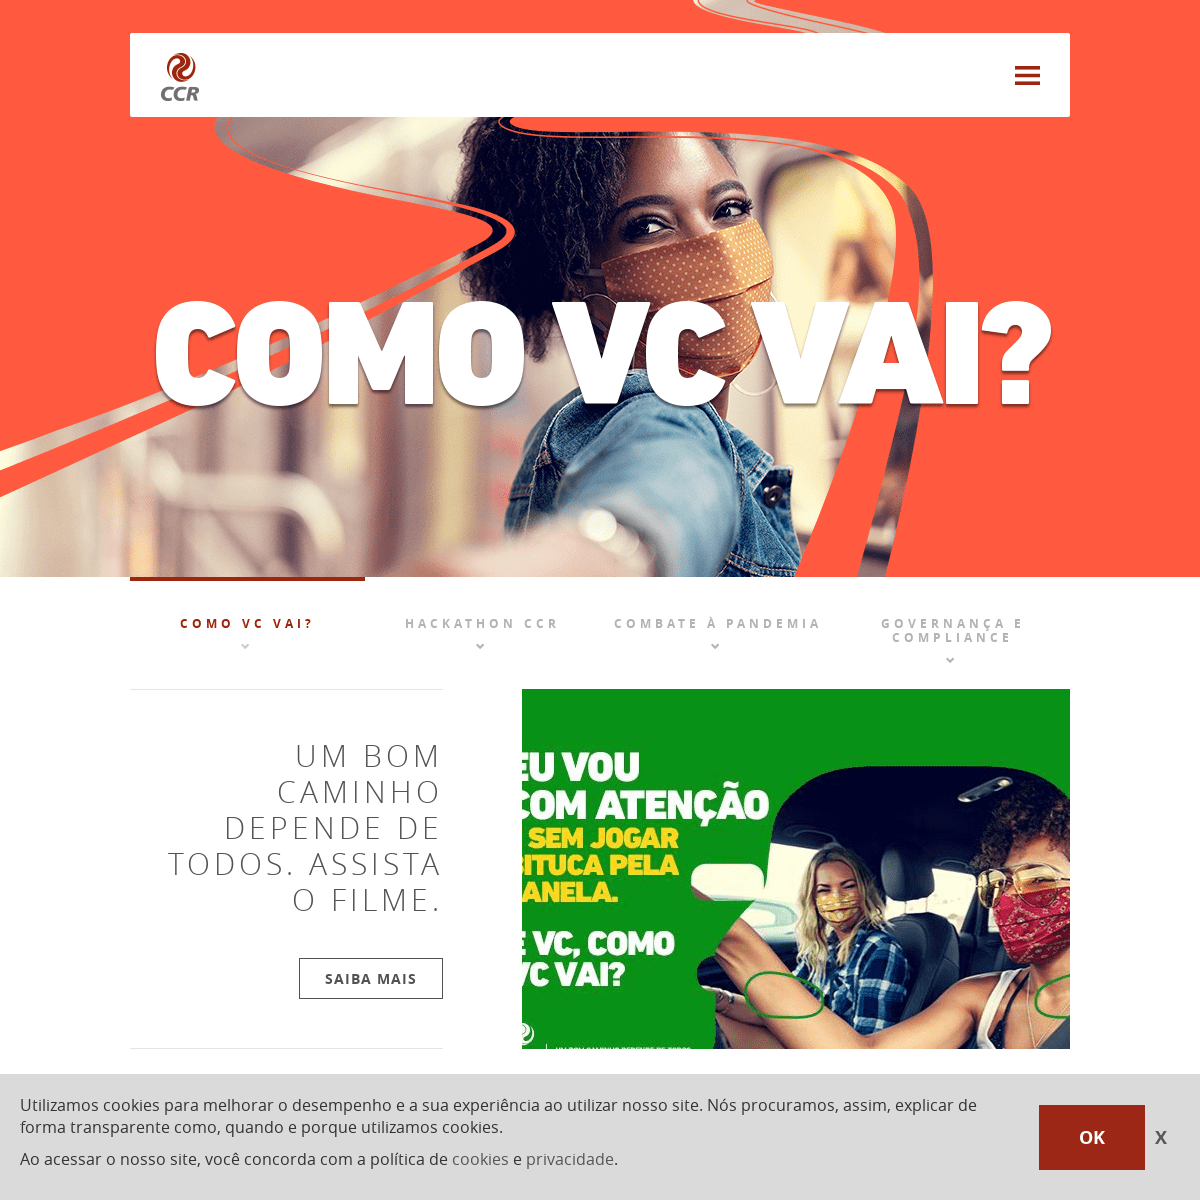 A complete backup of grupoccr.com.br